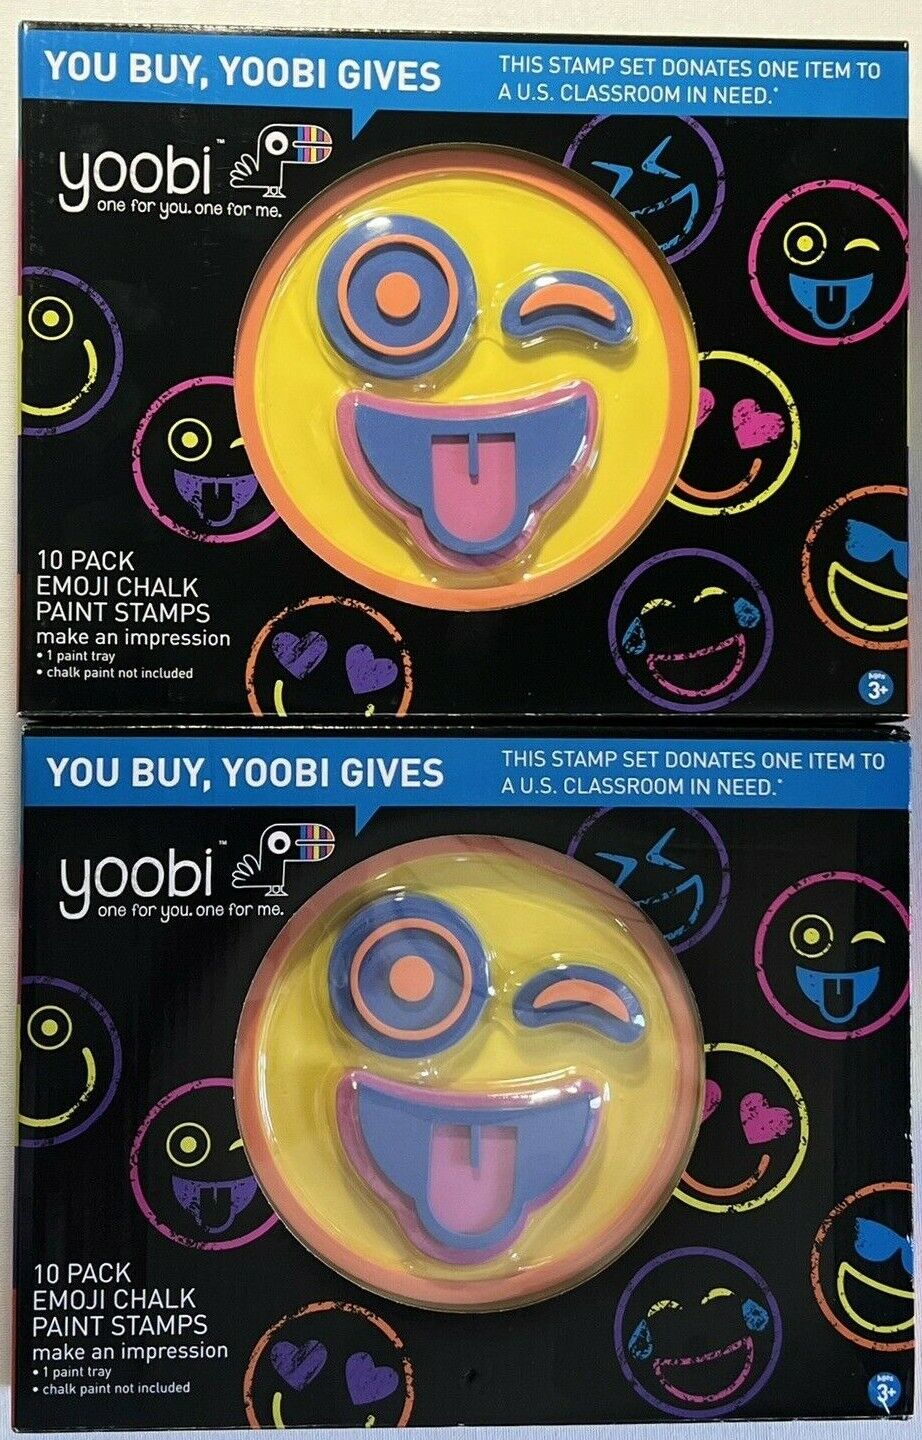 2 Yoobi Pack Emoji Chalk Paint Stamps